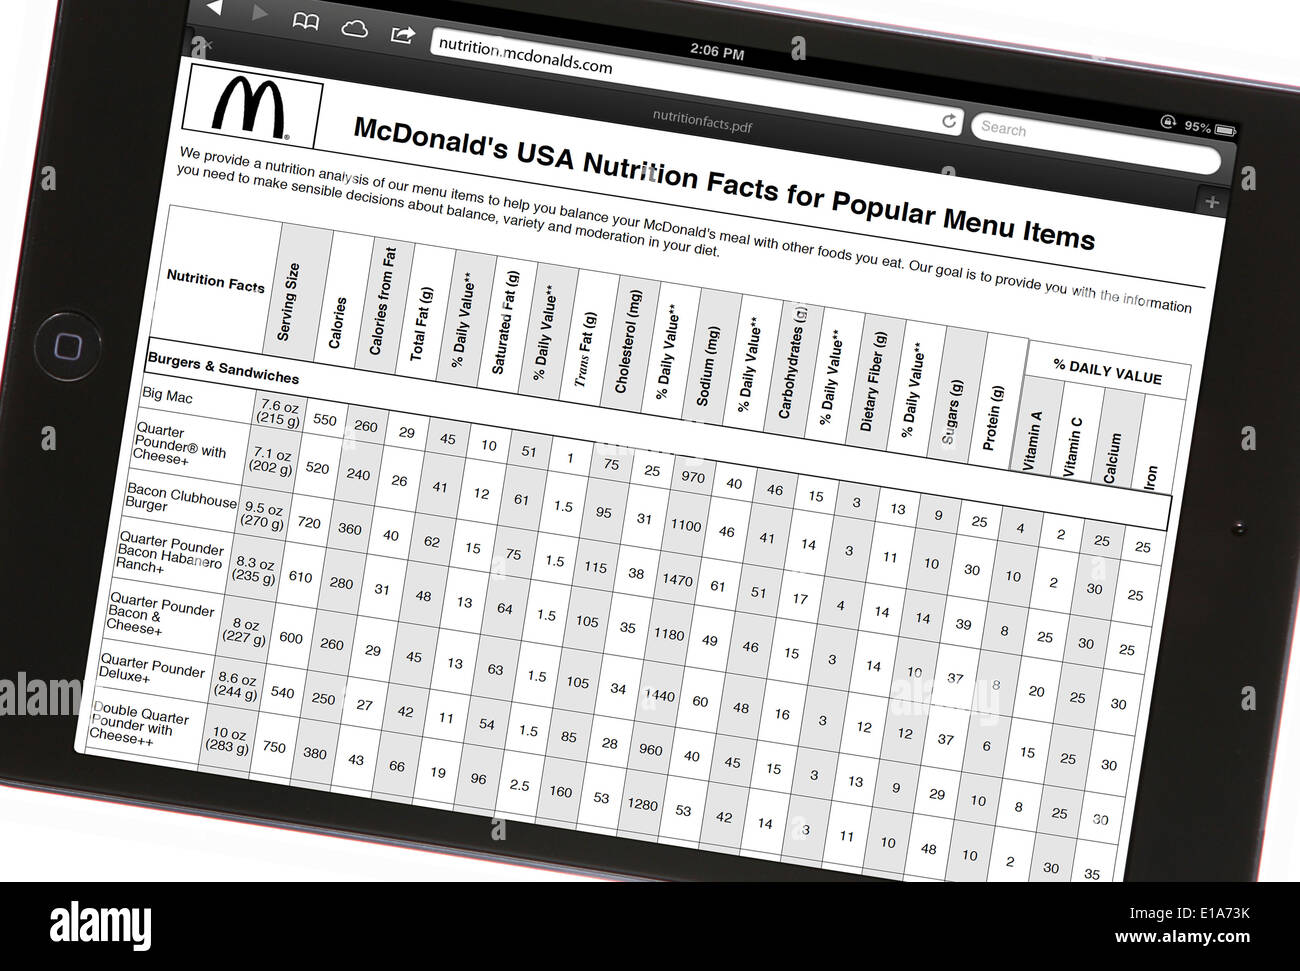 Apple iPad Mini featuring 'McDonald's USA Nutrition Facts for Popular Menu Items' Stock Photo